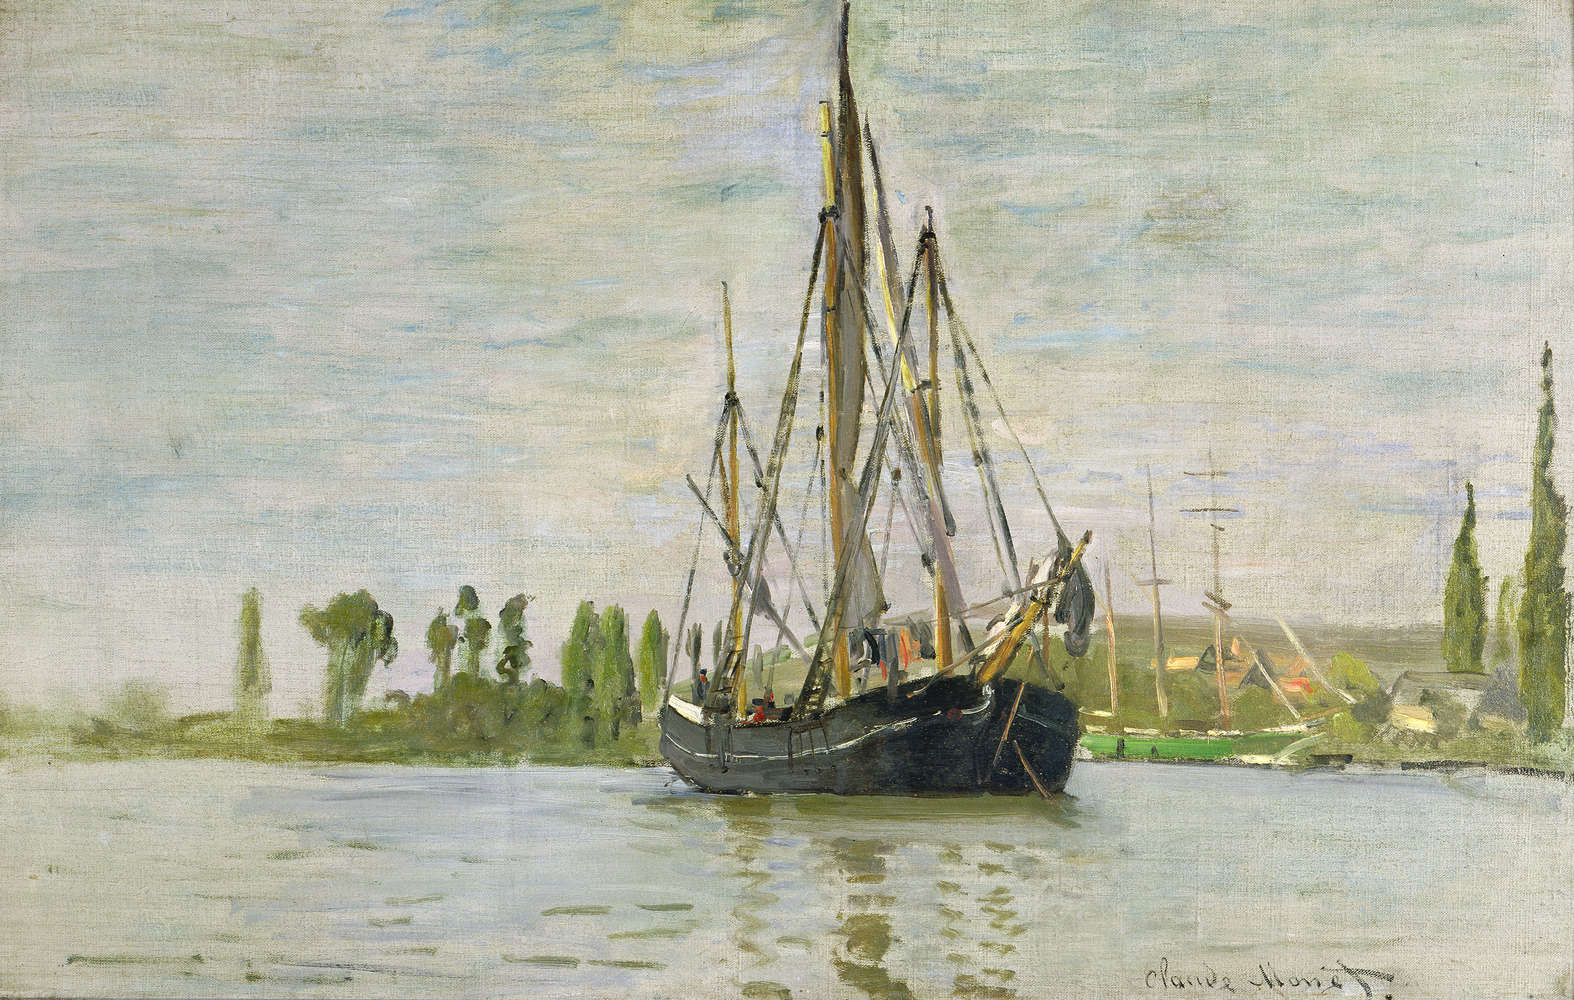             Fotomurali "La Chasse-Marée all'ancora" di Claude Monet
        